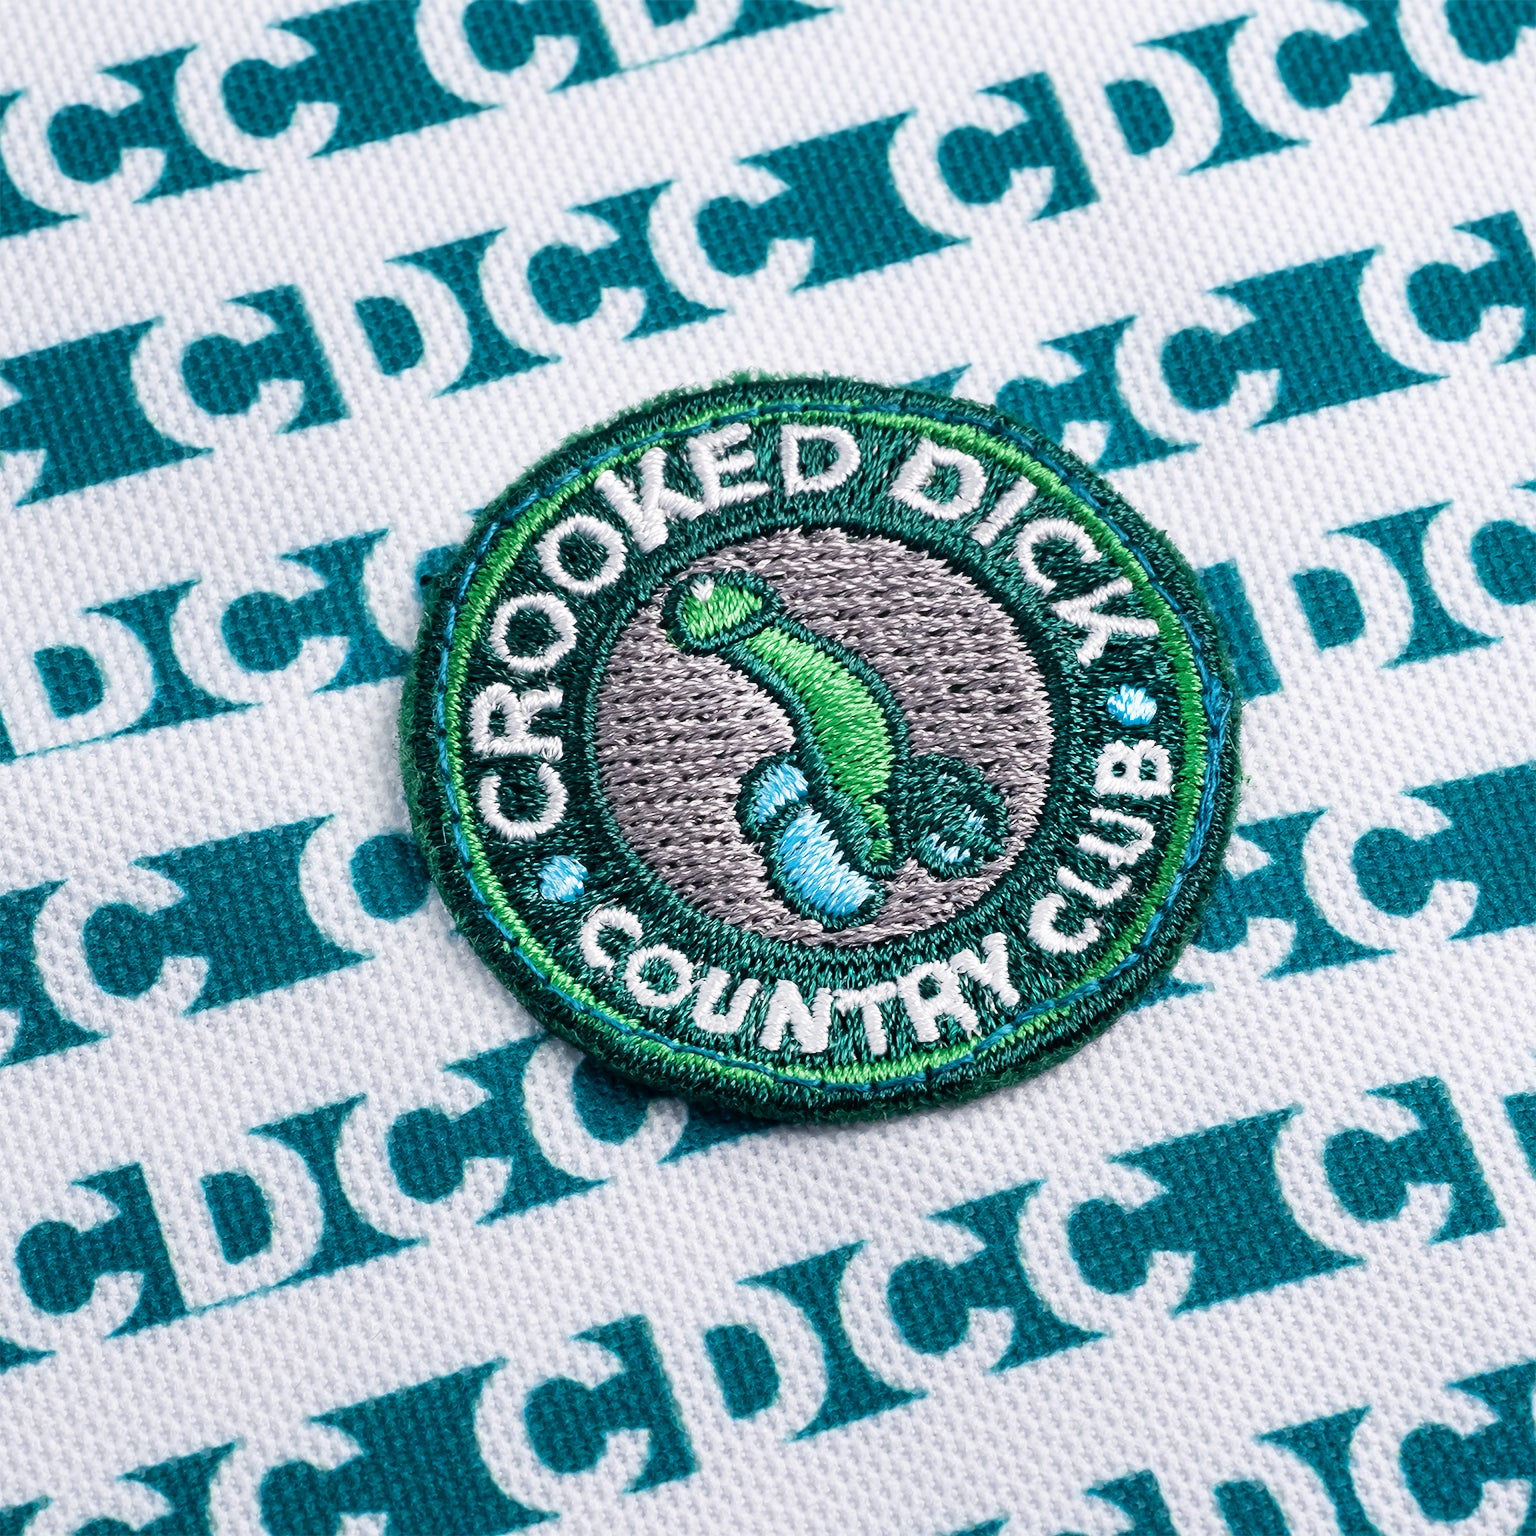 Crooked Dick Country Club Membership